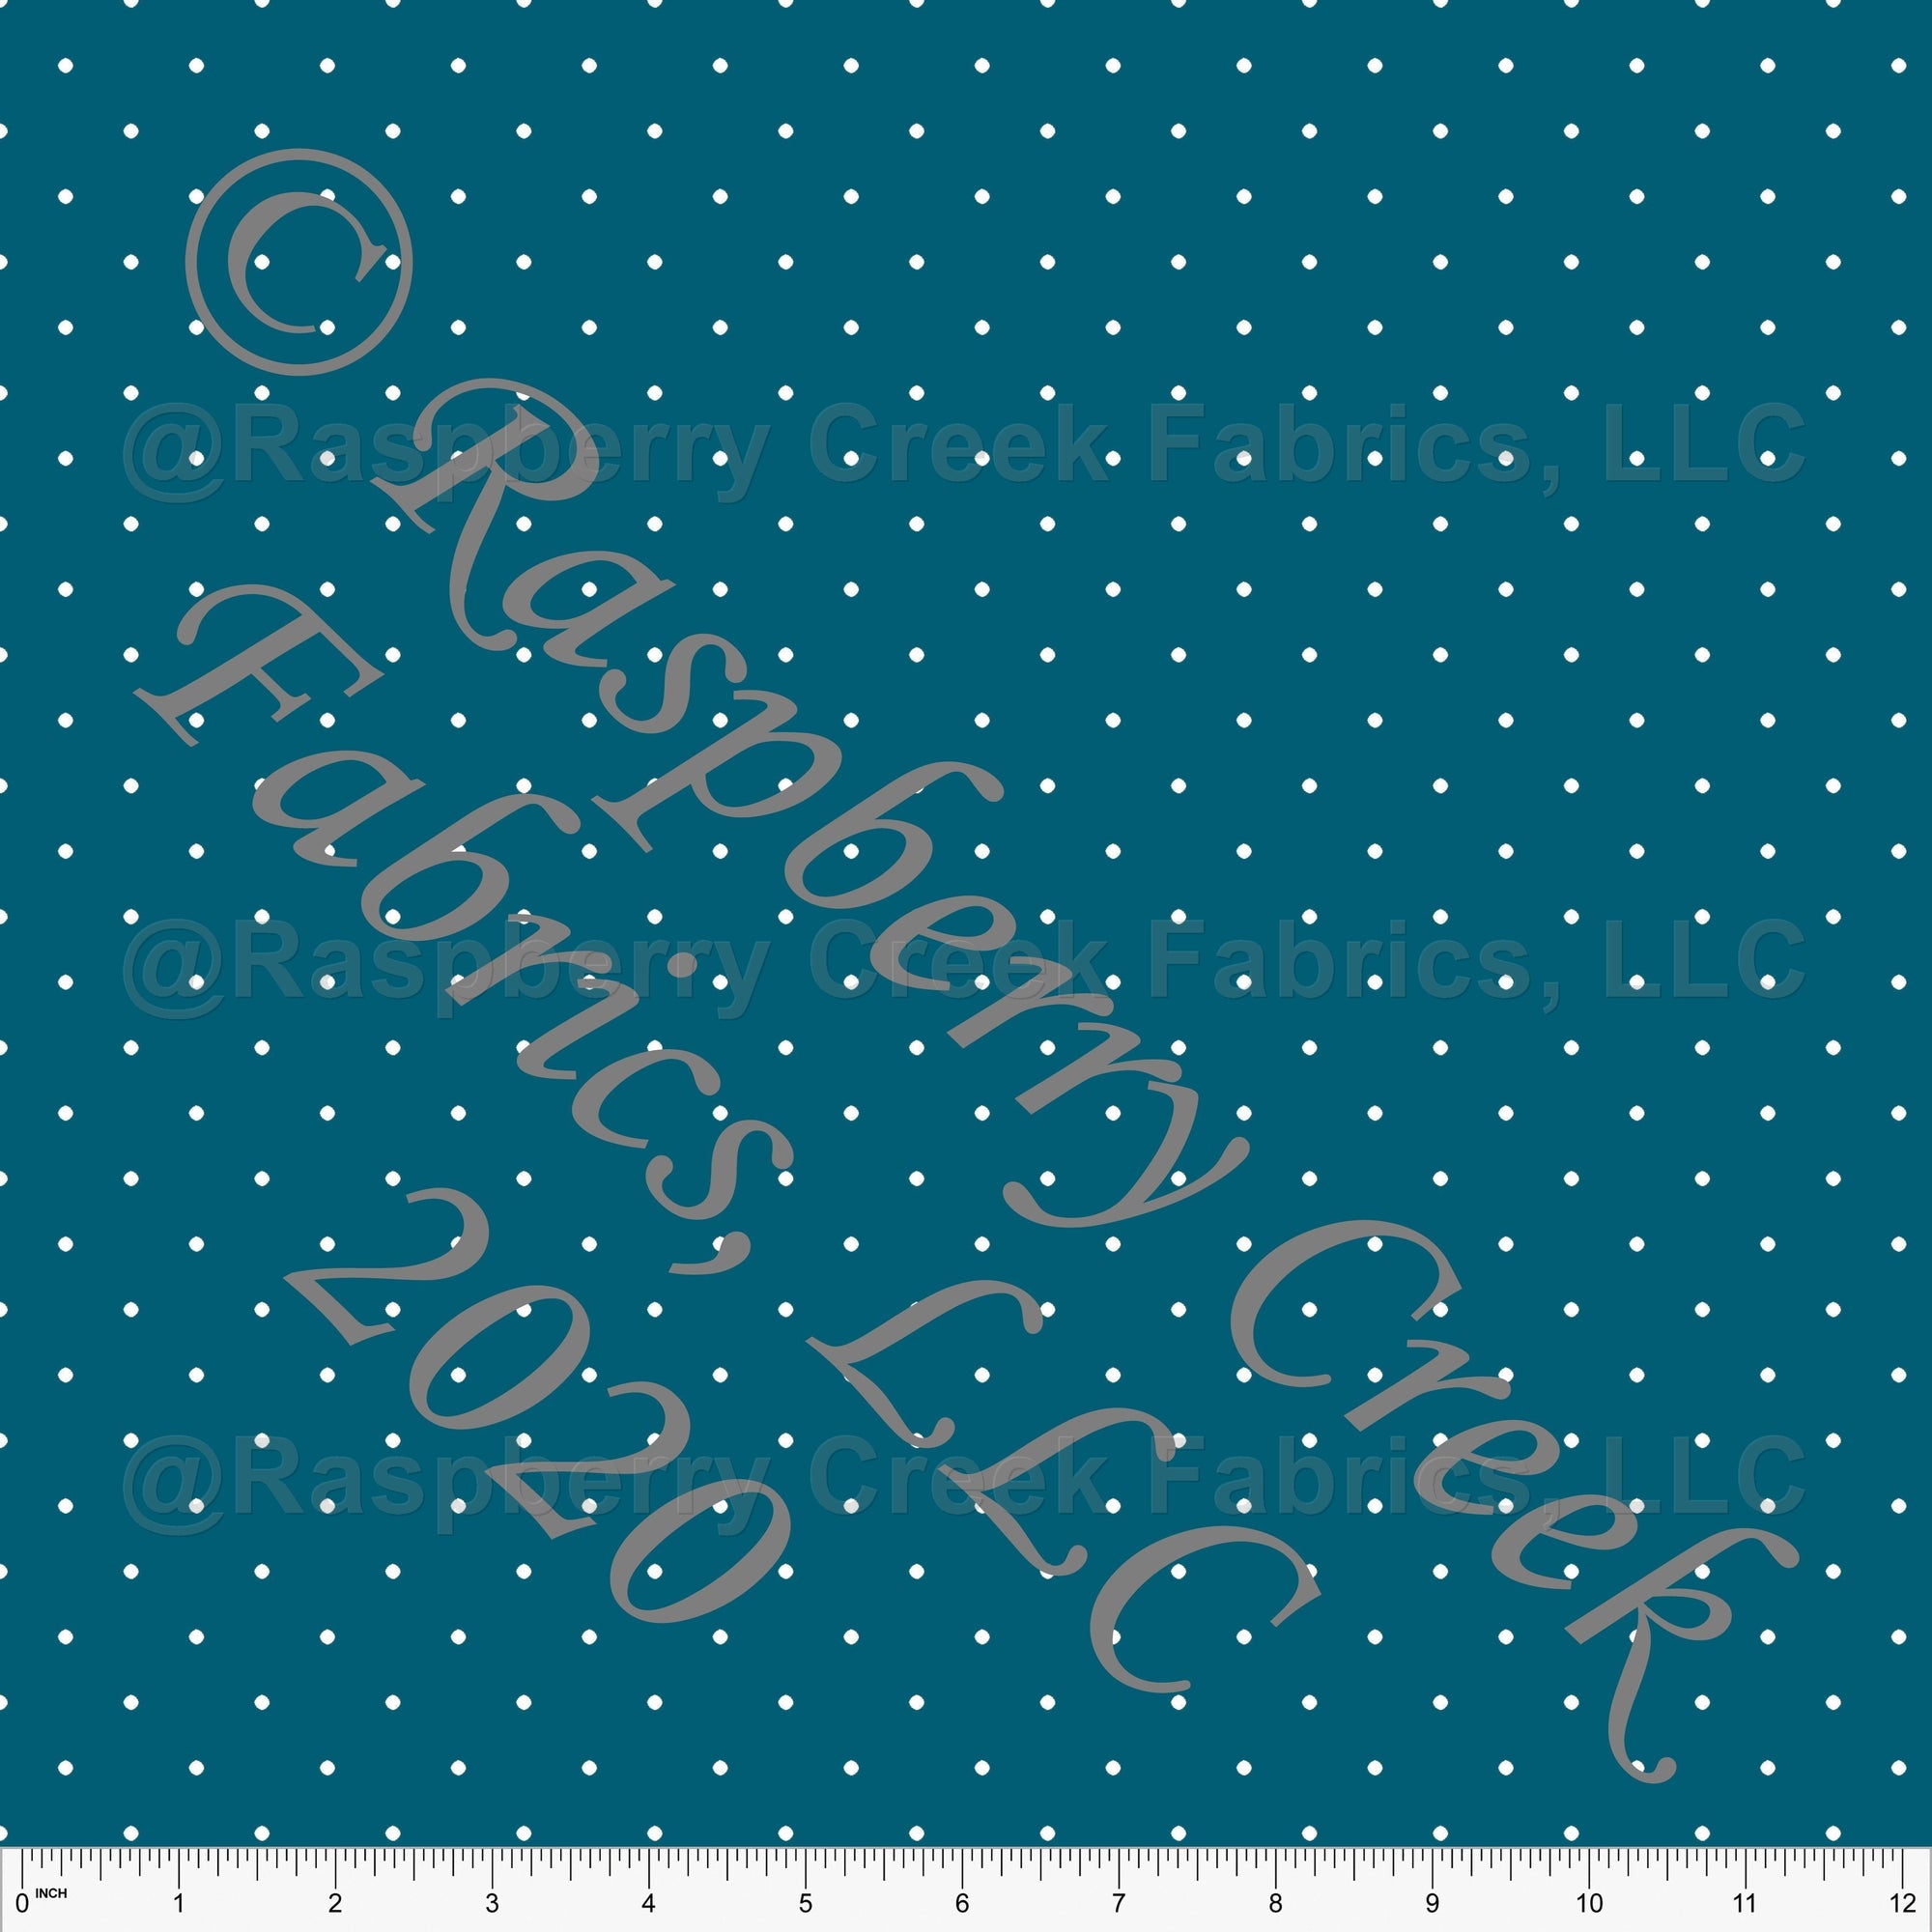 Teal and White Pin Dot, Basics for CLUB Fabrics Fabric, Raspberry Creek Fabrics, watermarked